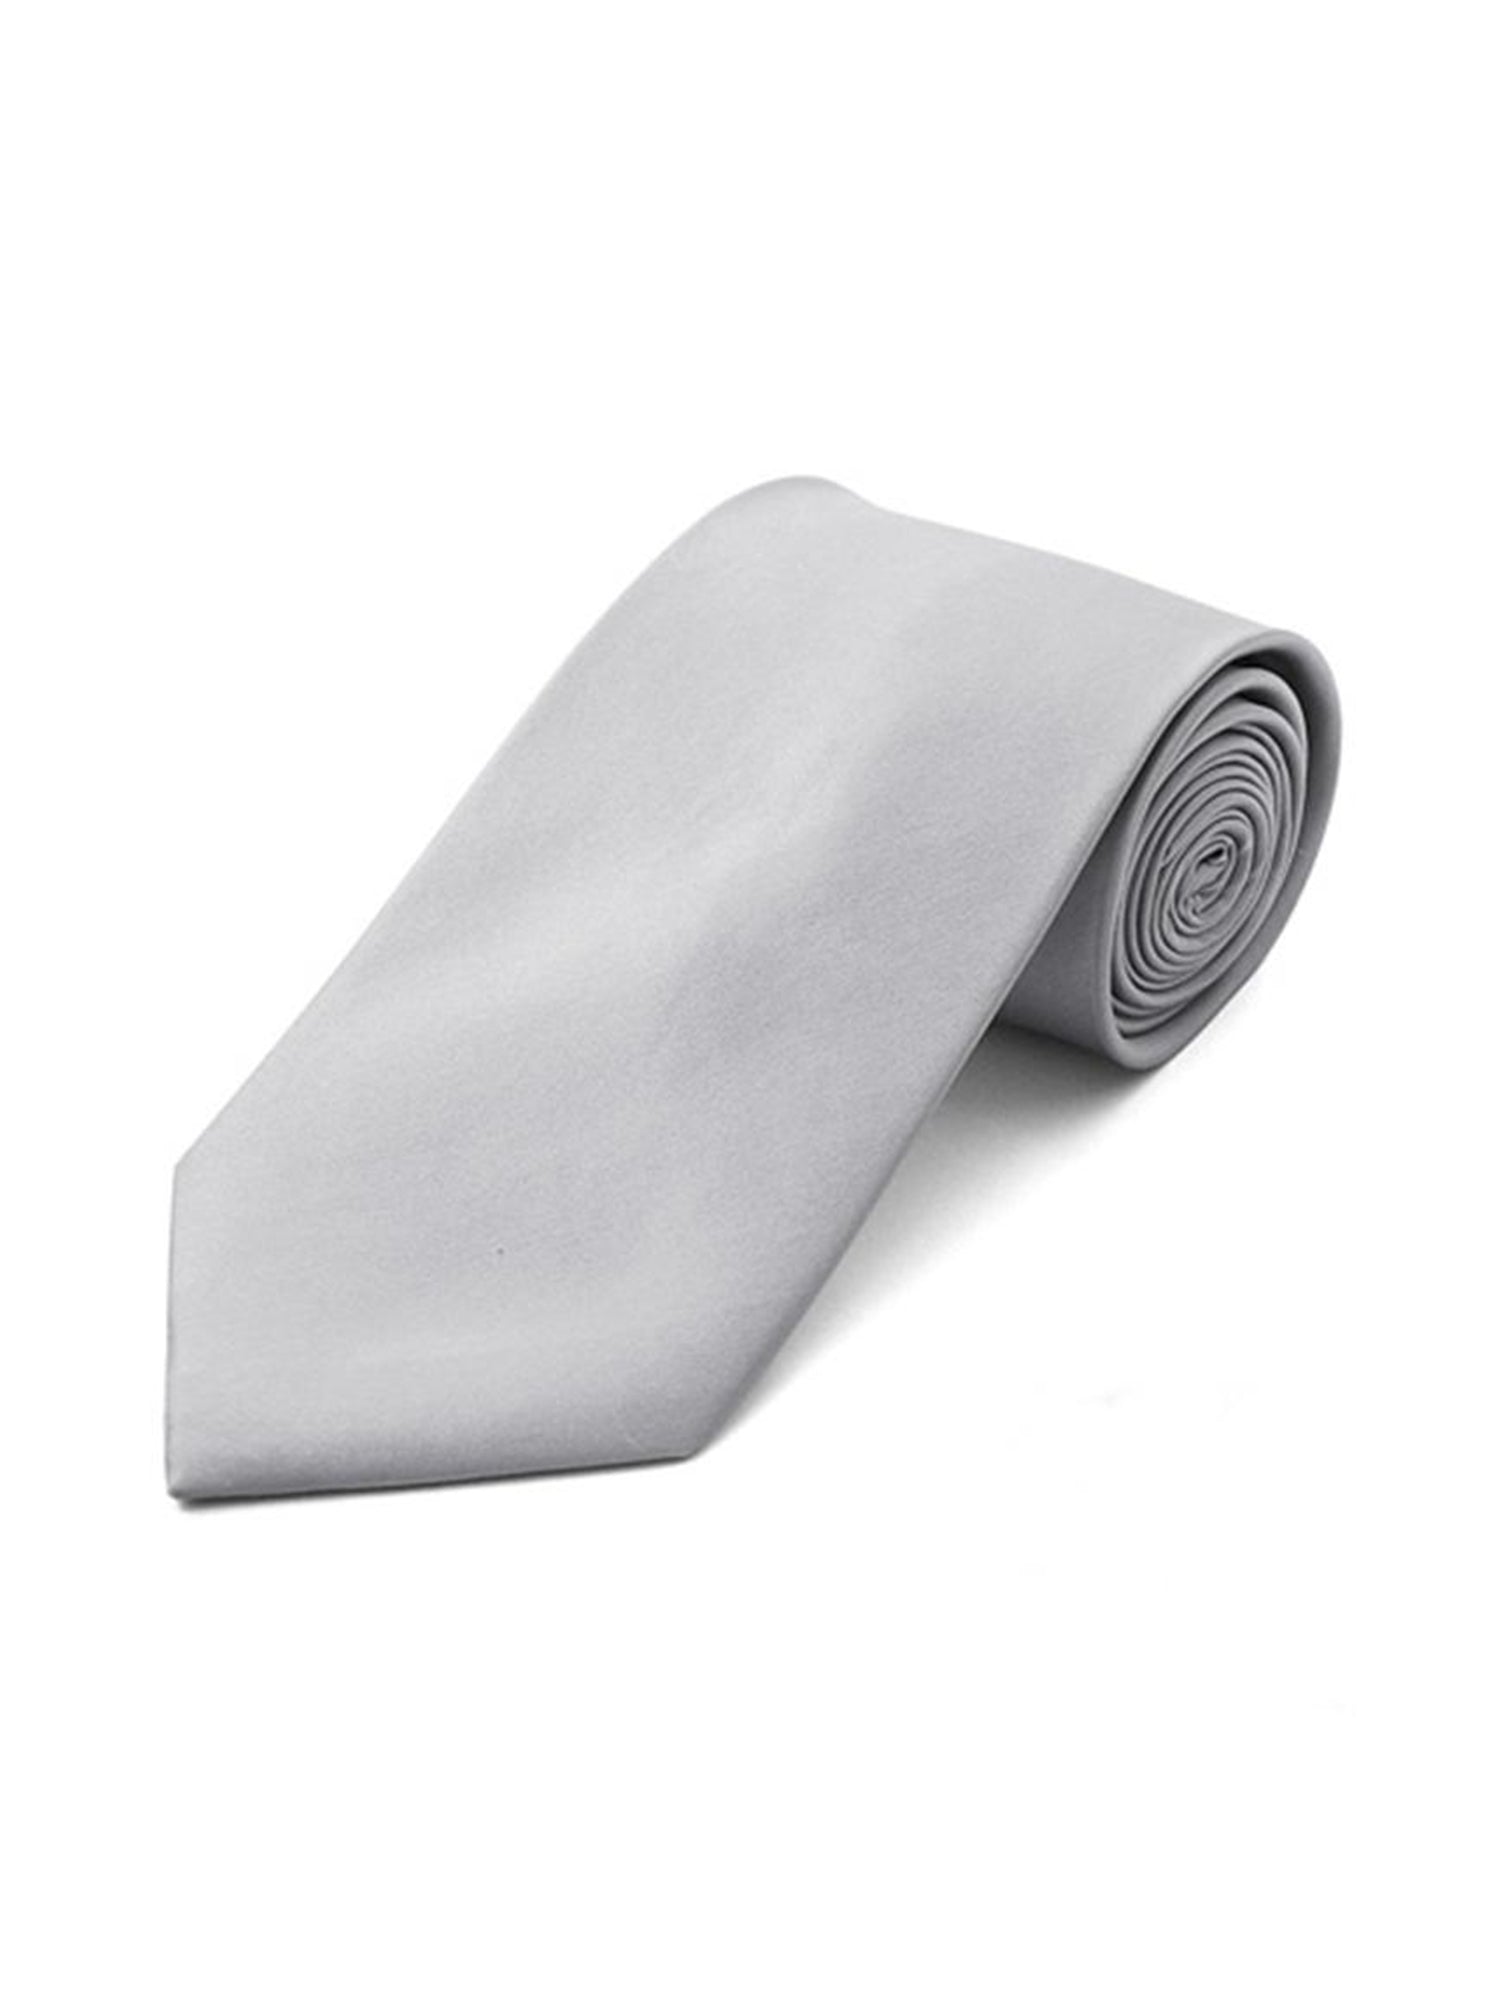 Men's Classic Solid Color Wedding Neck Tie Neck Tie TheDapperTie Silver Regular 